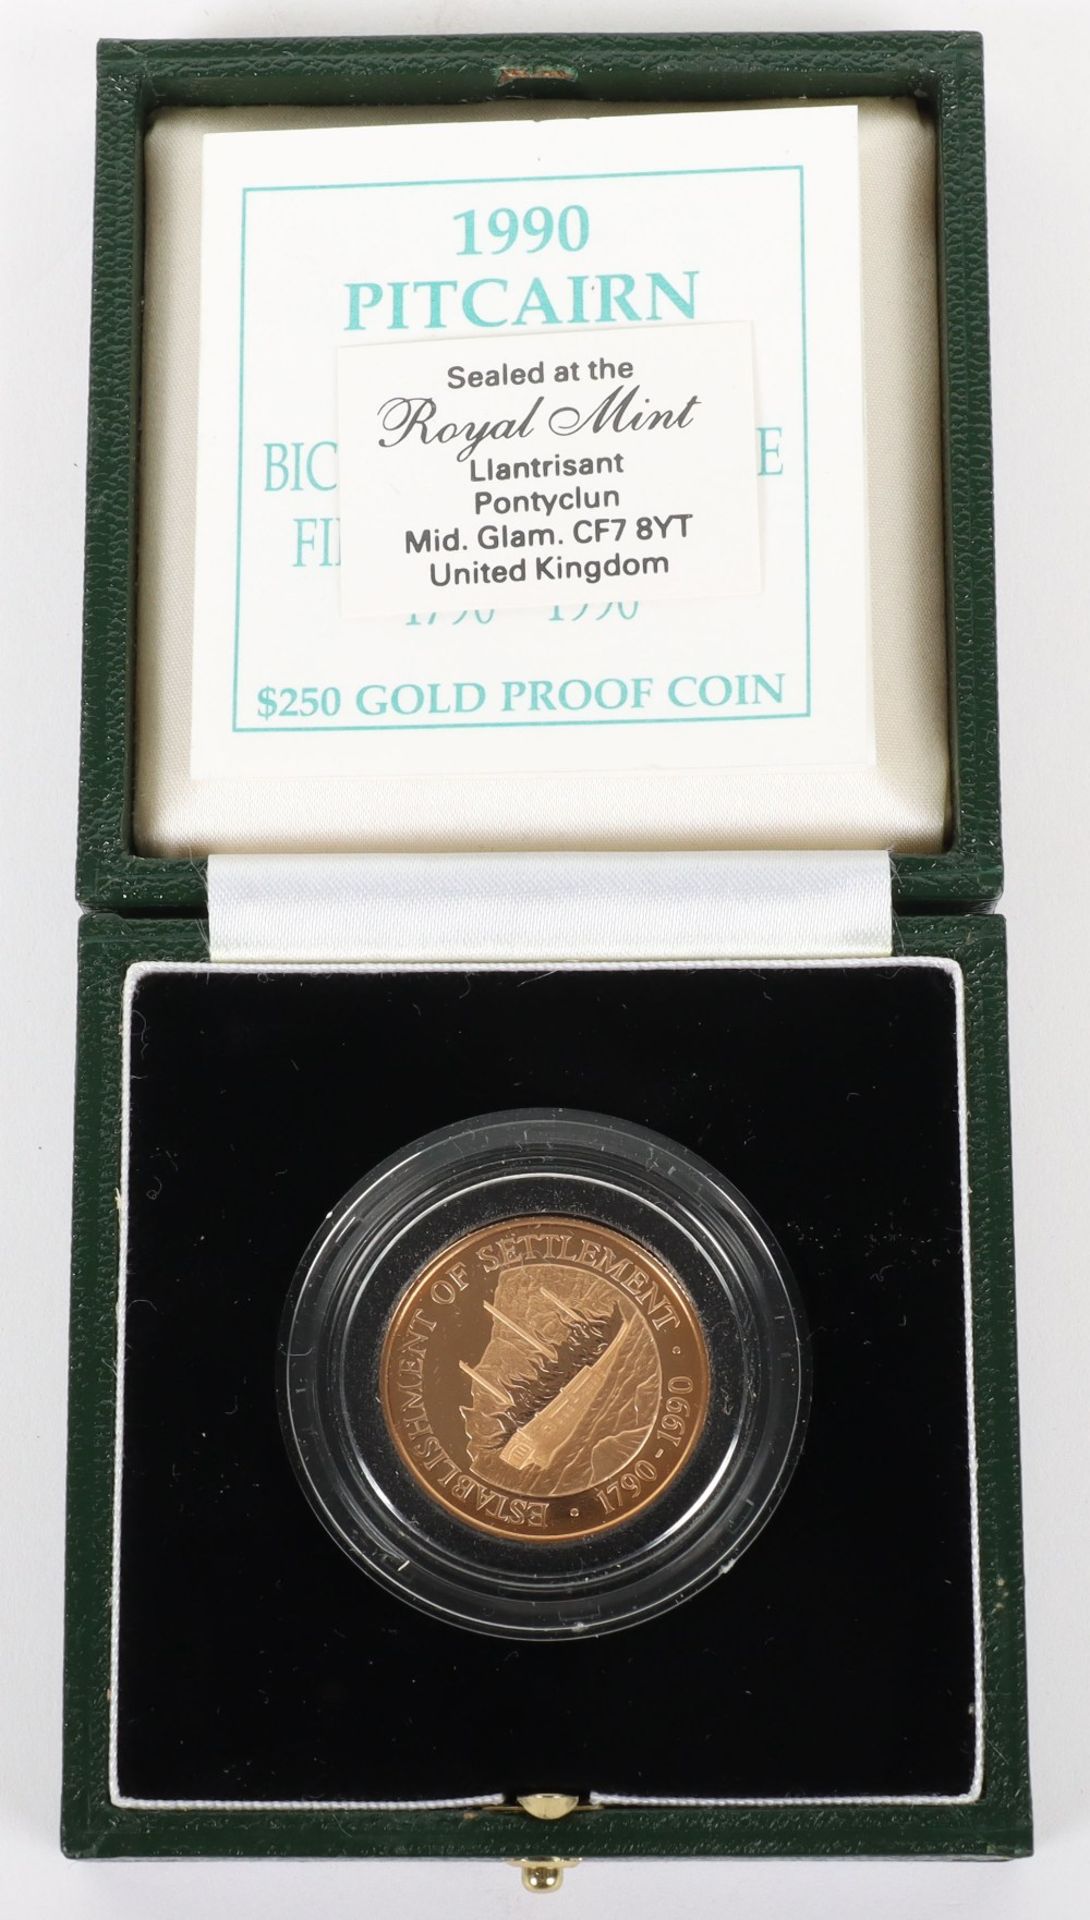 1990 Pitcairn Islands gold proof $250